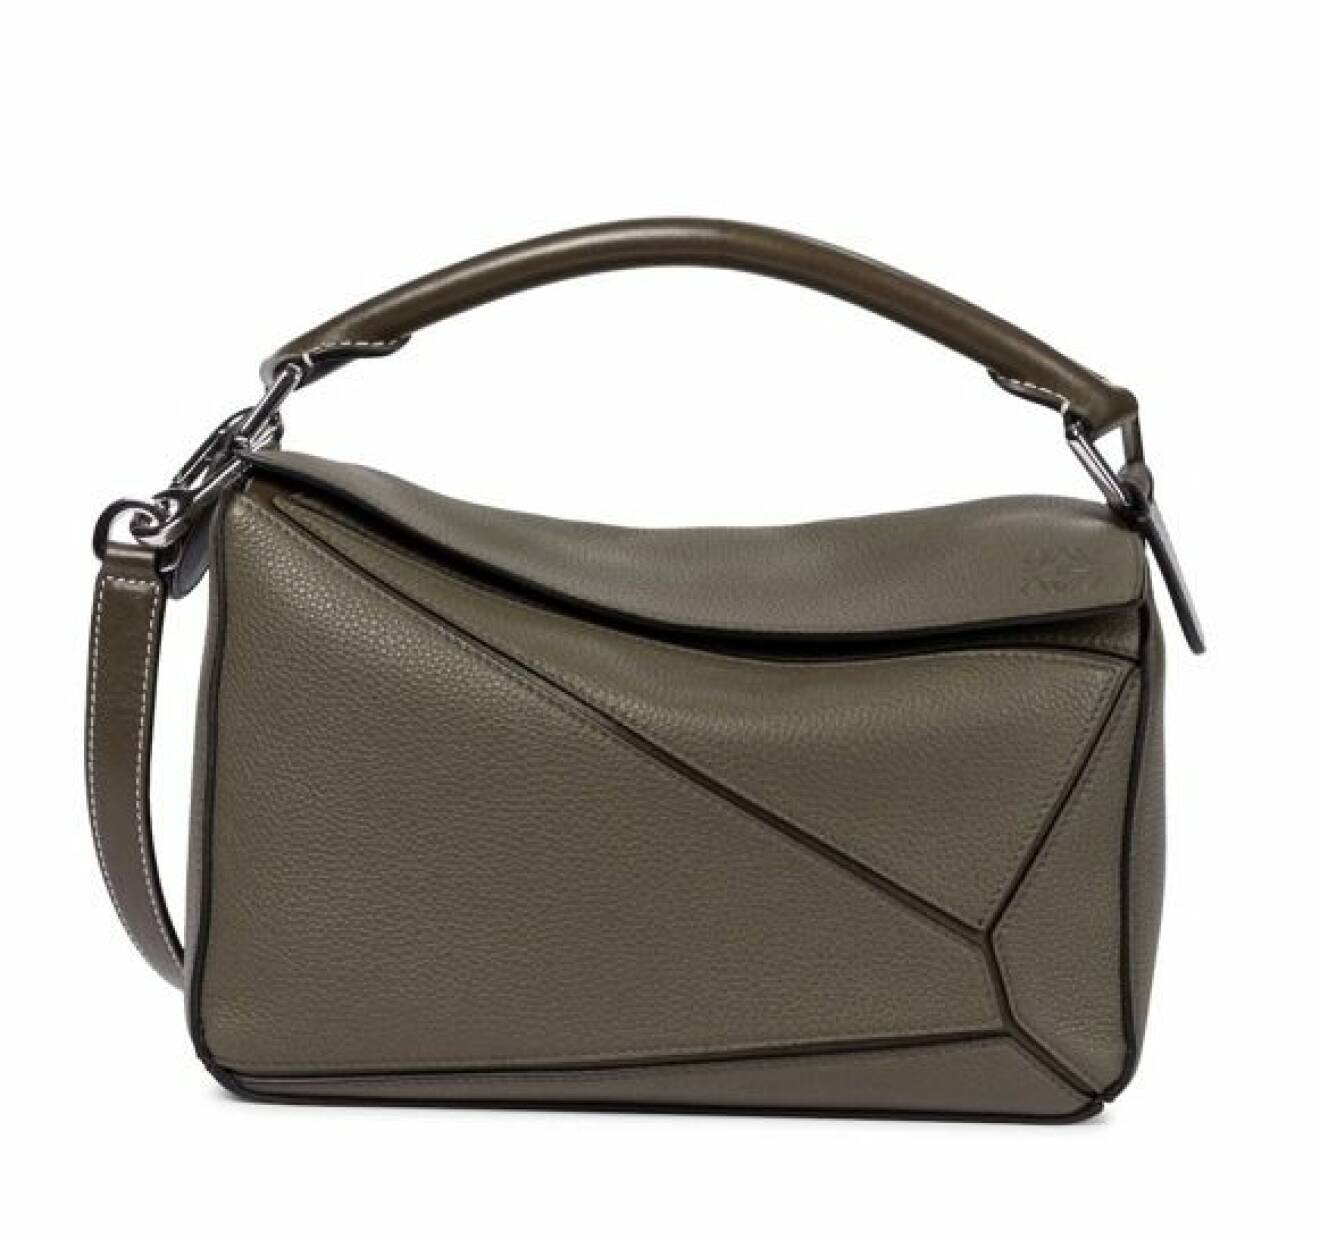 Khakigrön skinnväska i modellen "Puzzle Small leather shoulder bag". Väska från Loewe.